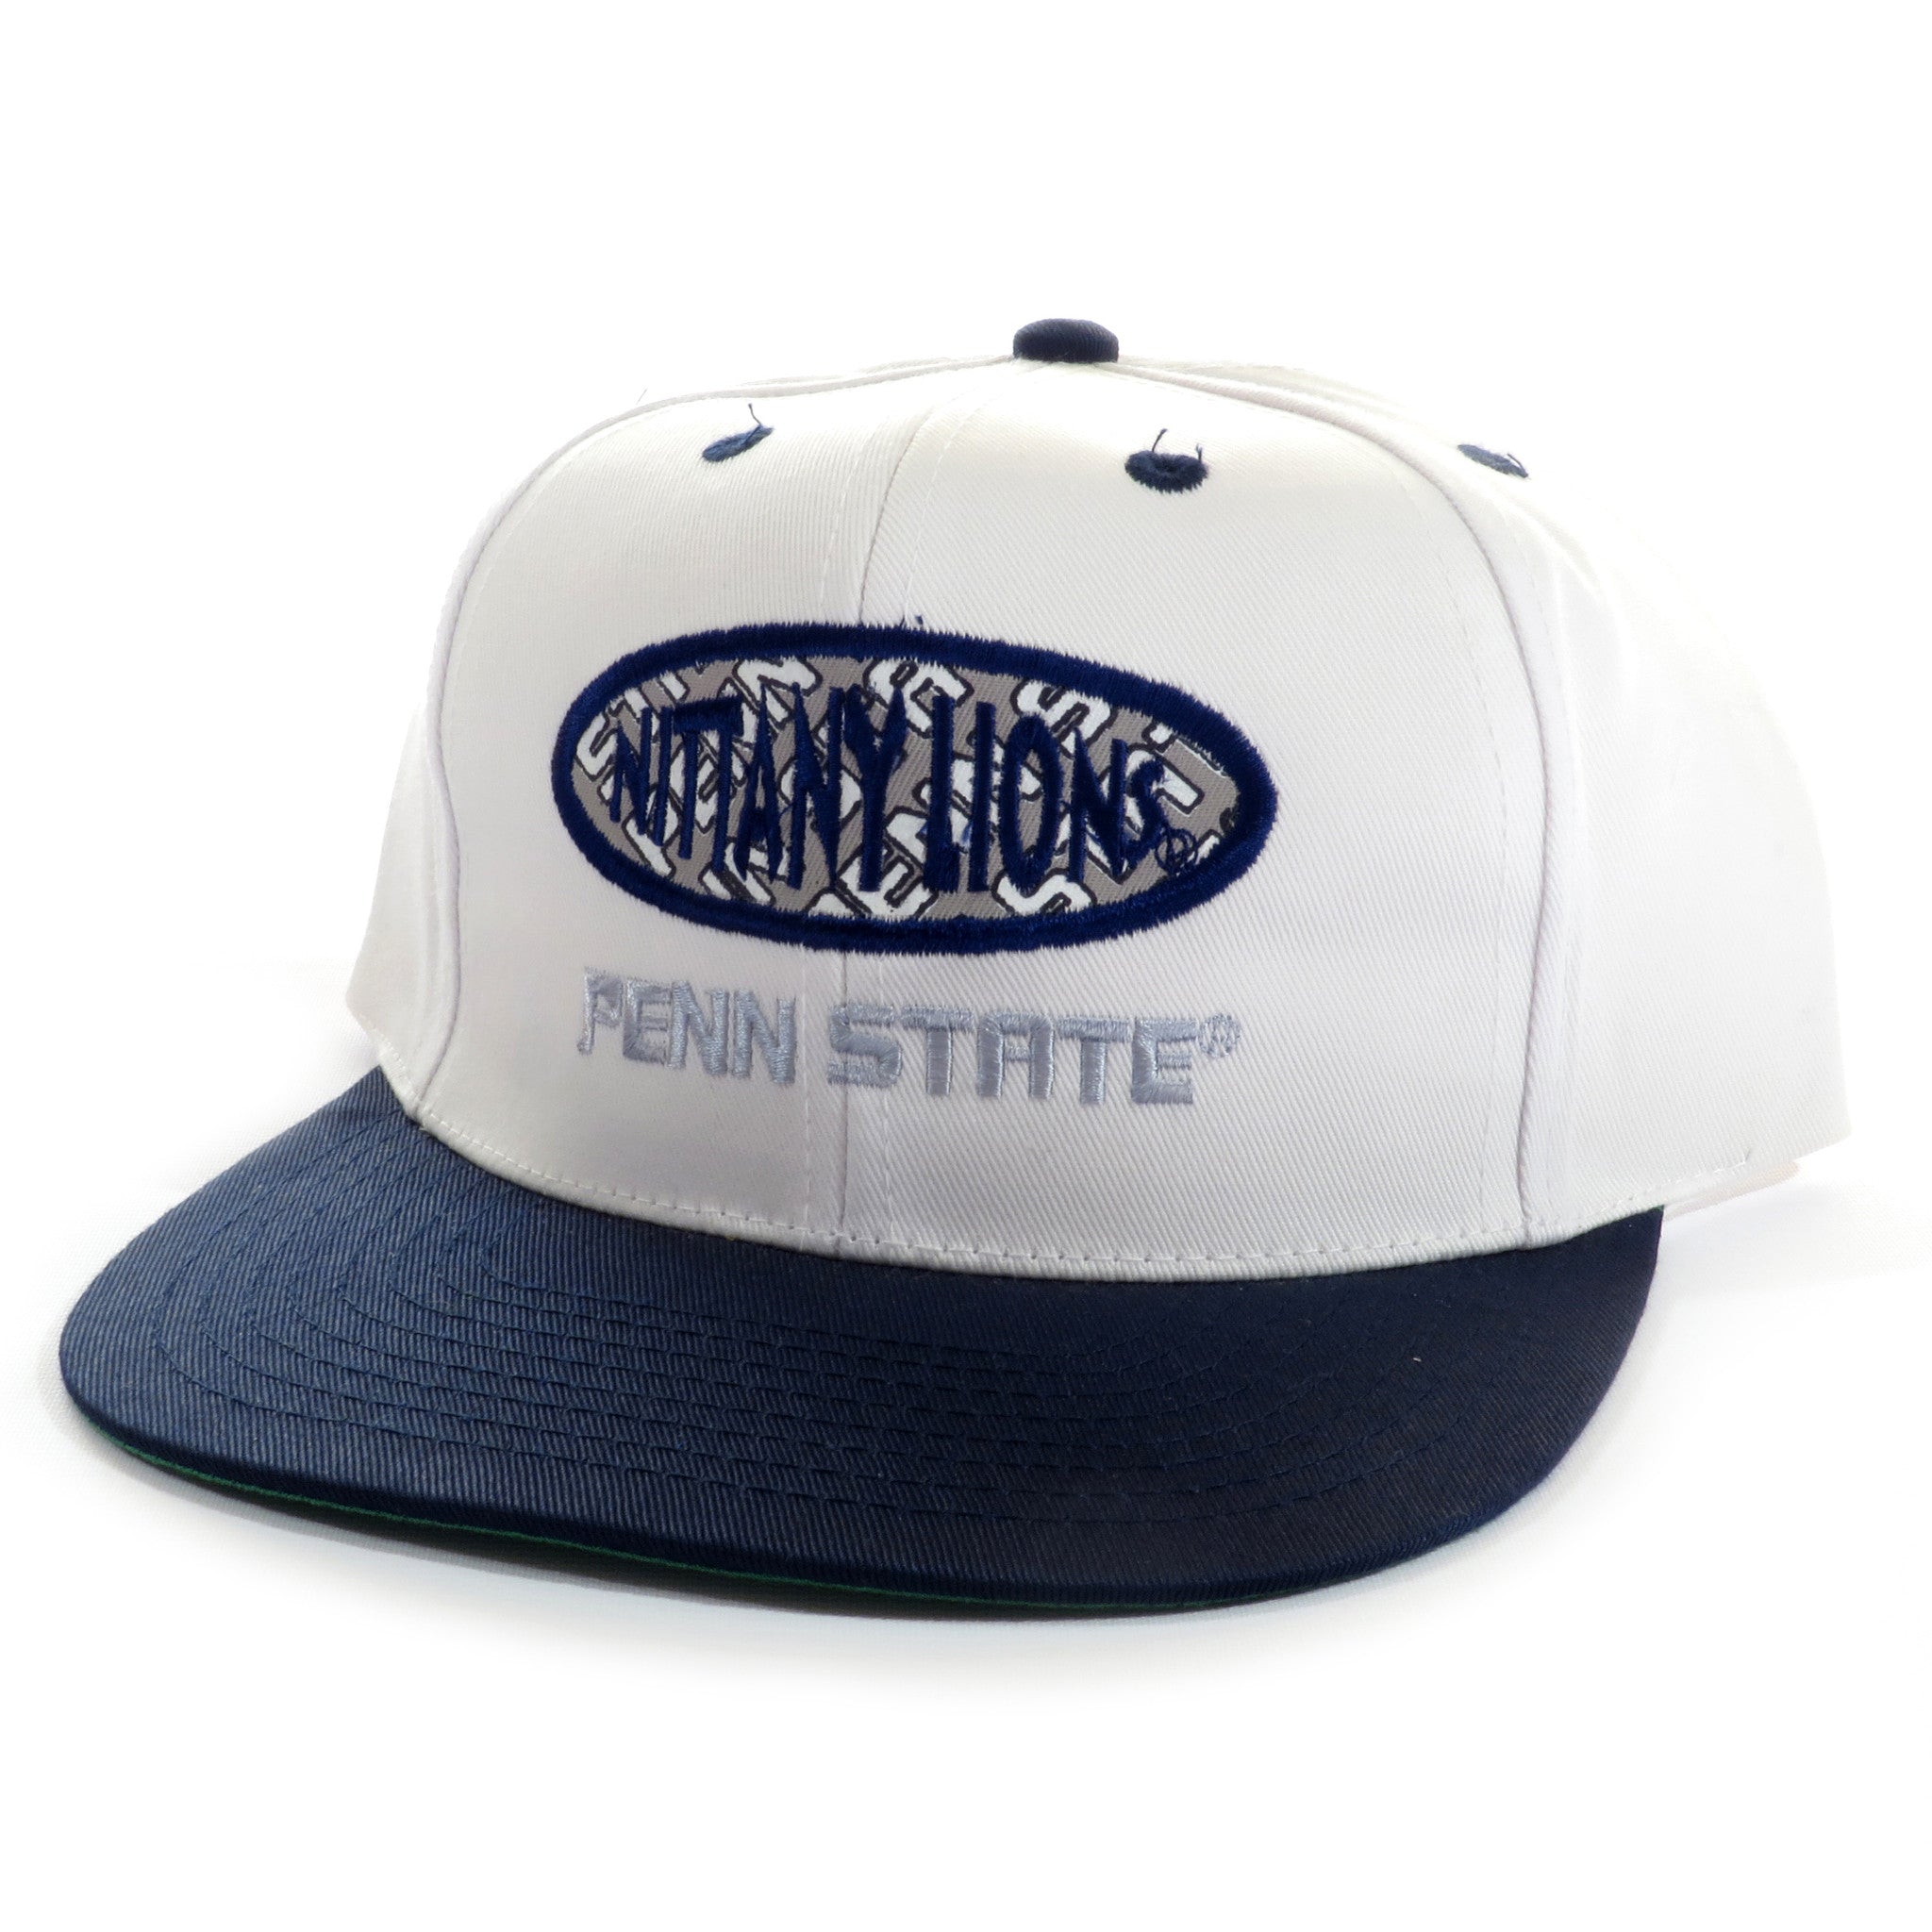 Penn State Nitany Lions Snapback Hat